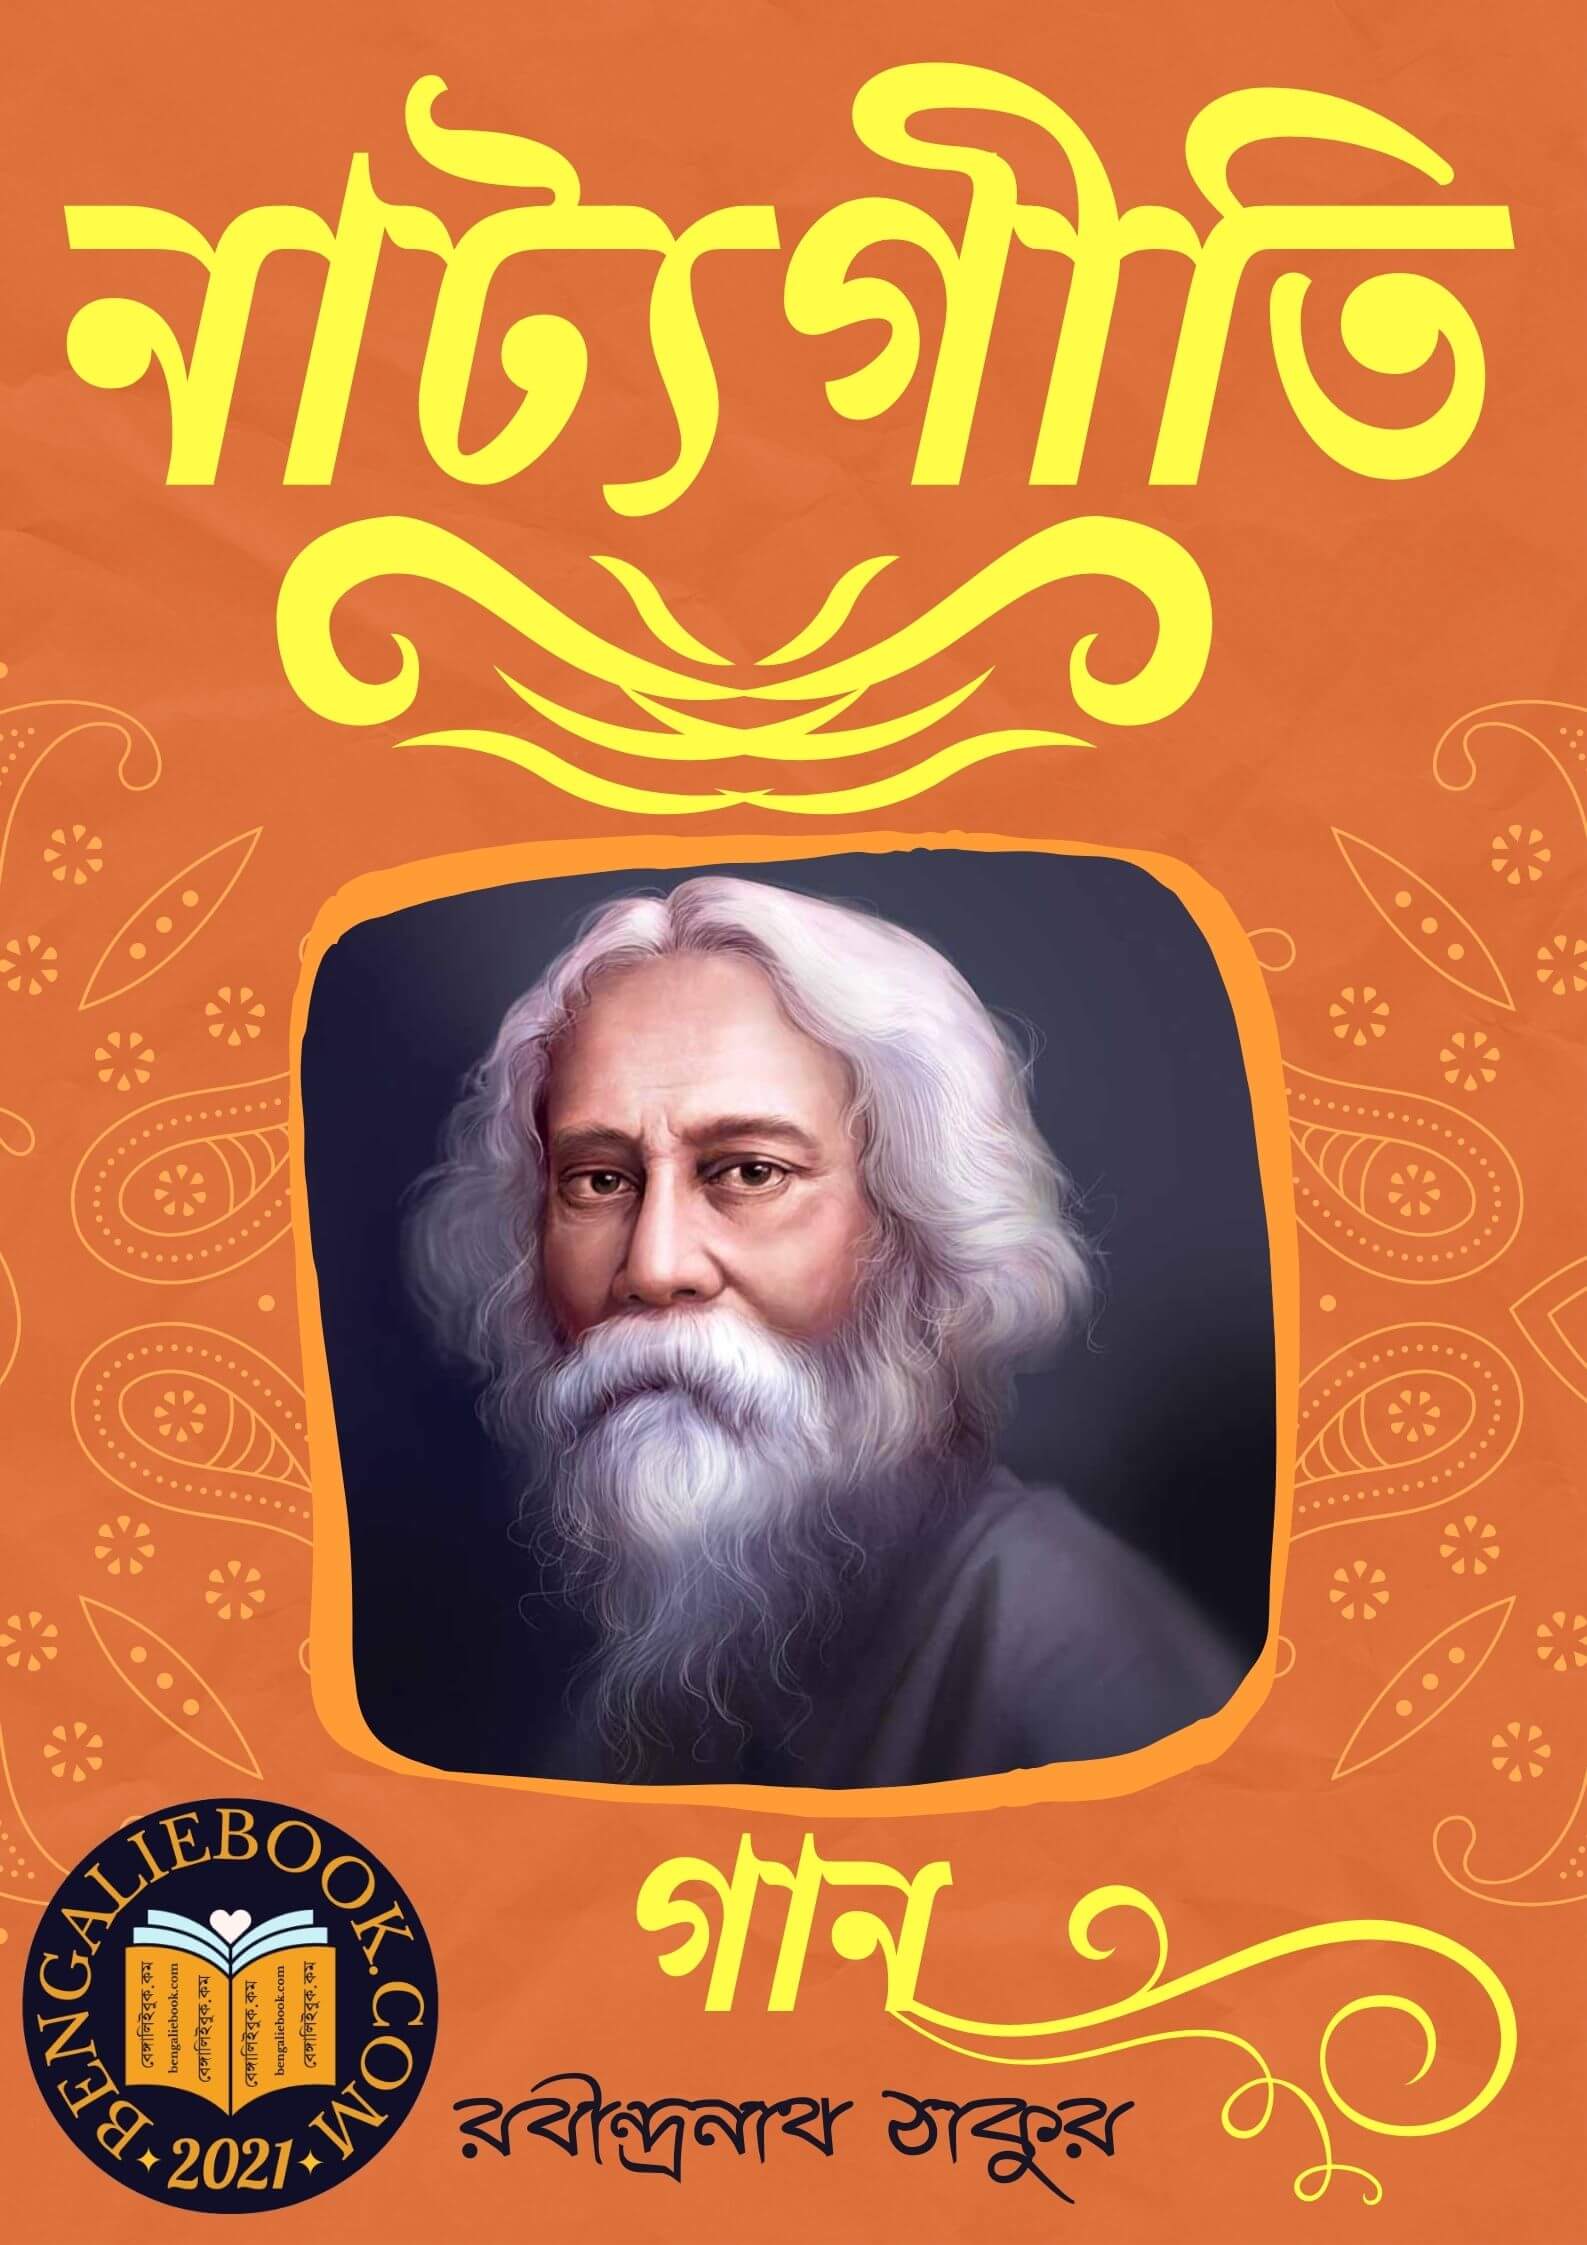 Read more about the article নাট্যগীতি-রবীন্দ্রনাথ ঠাকুর (Natyogiti by Rabindranath Tagore)